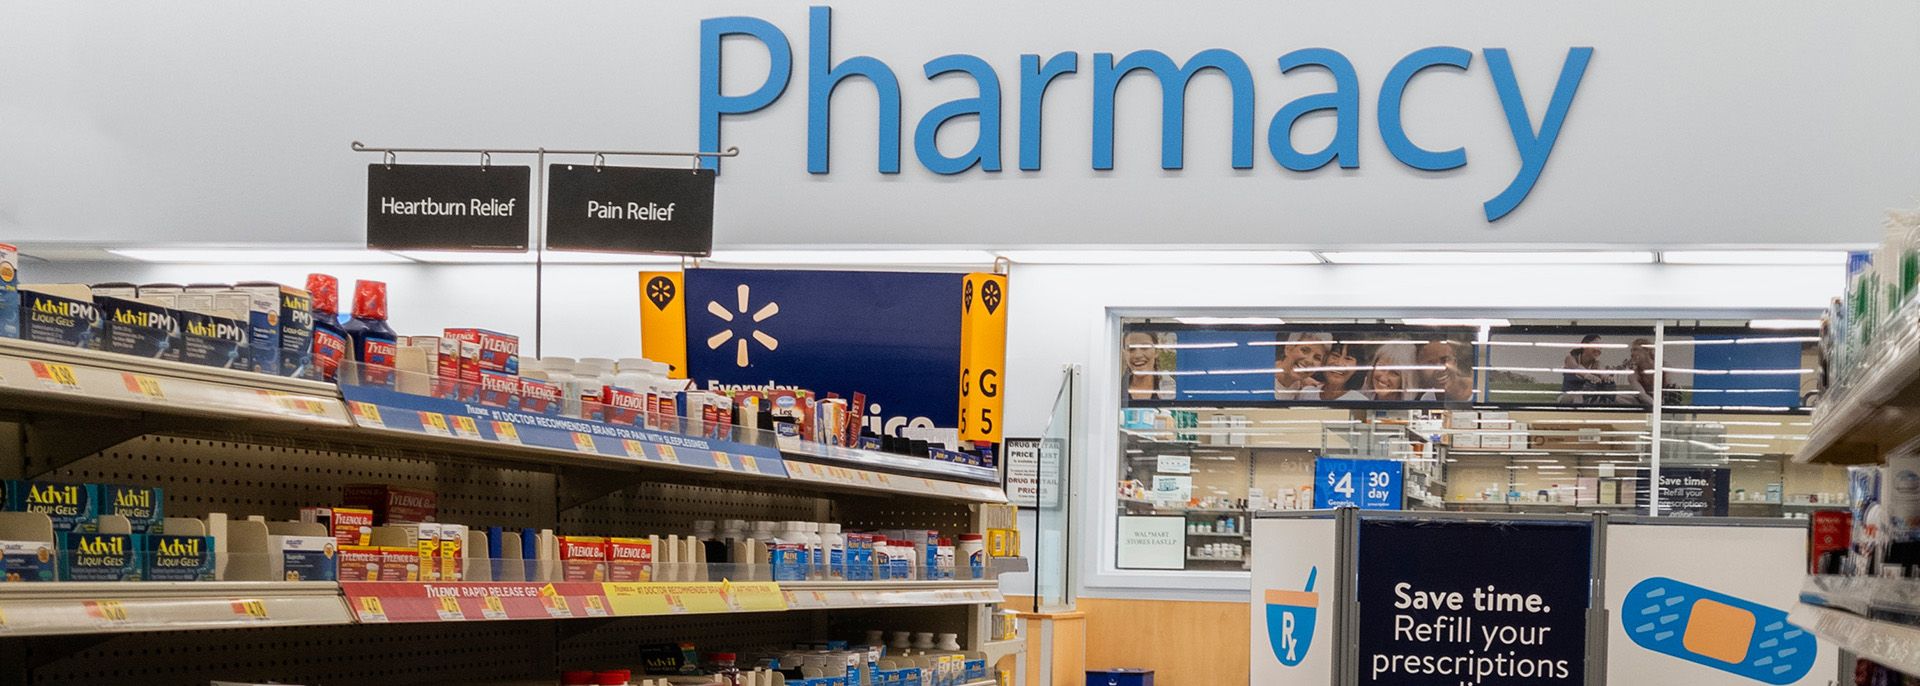 Walmart Pharmacy_Banner